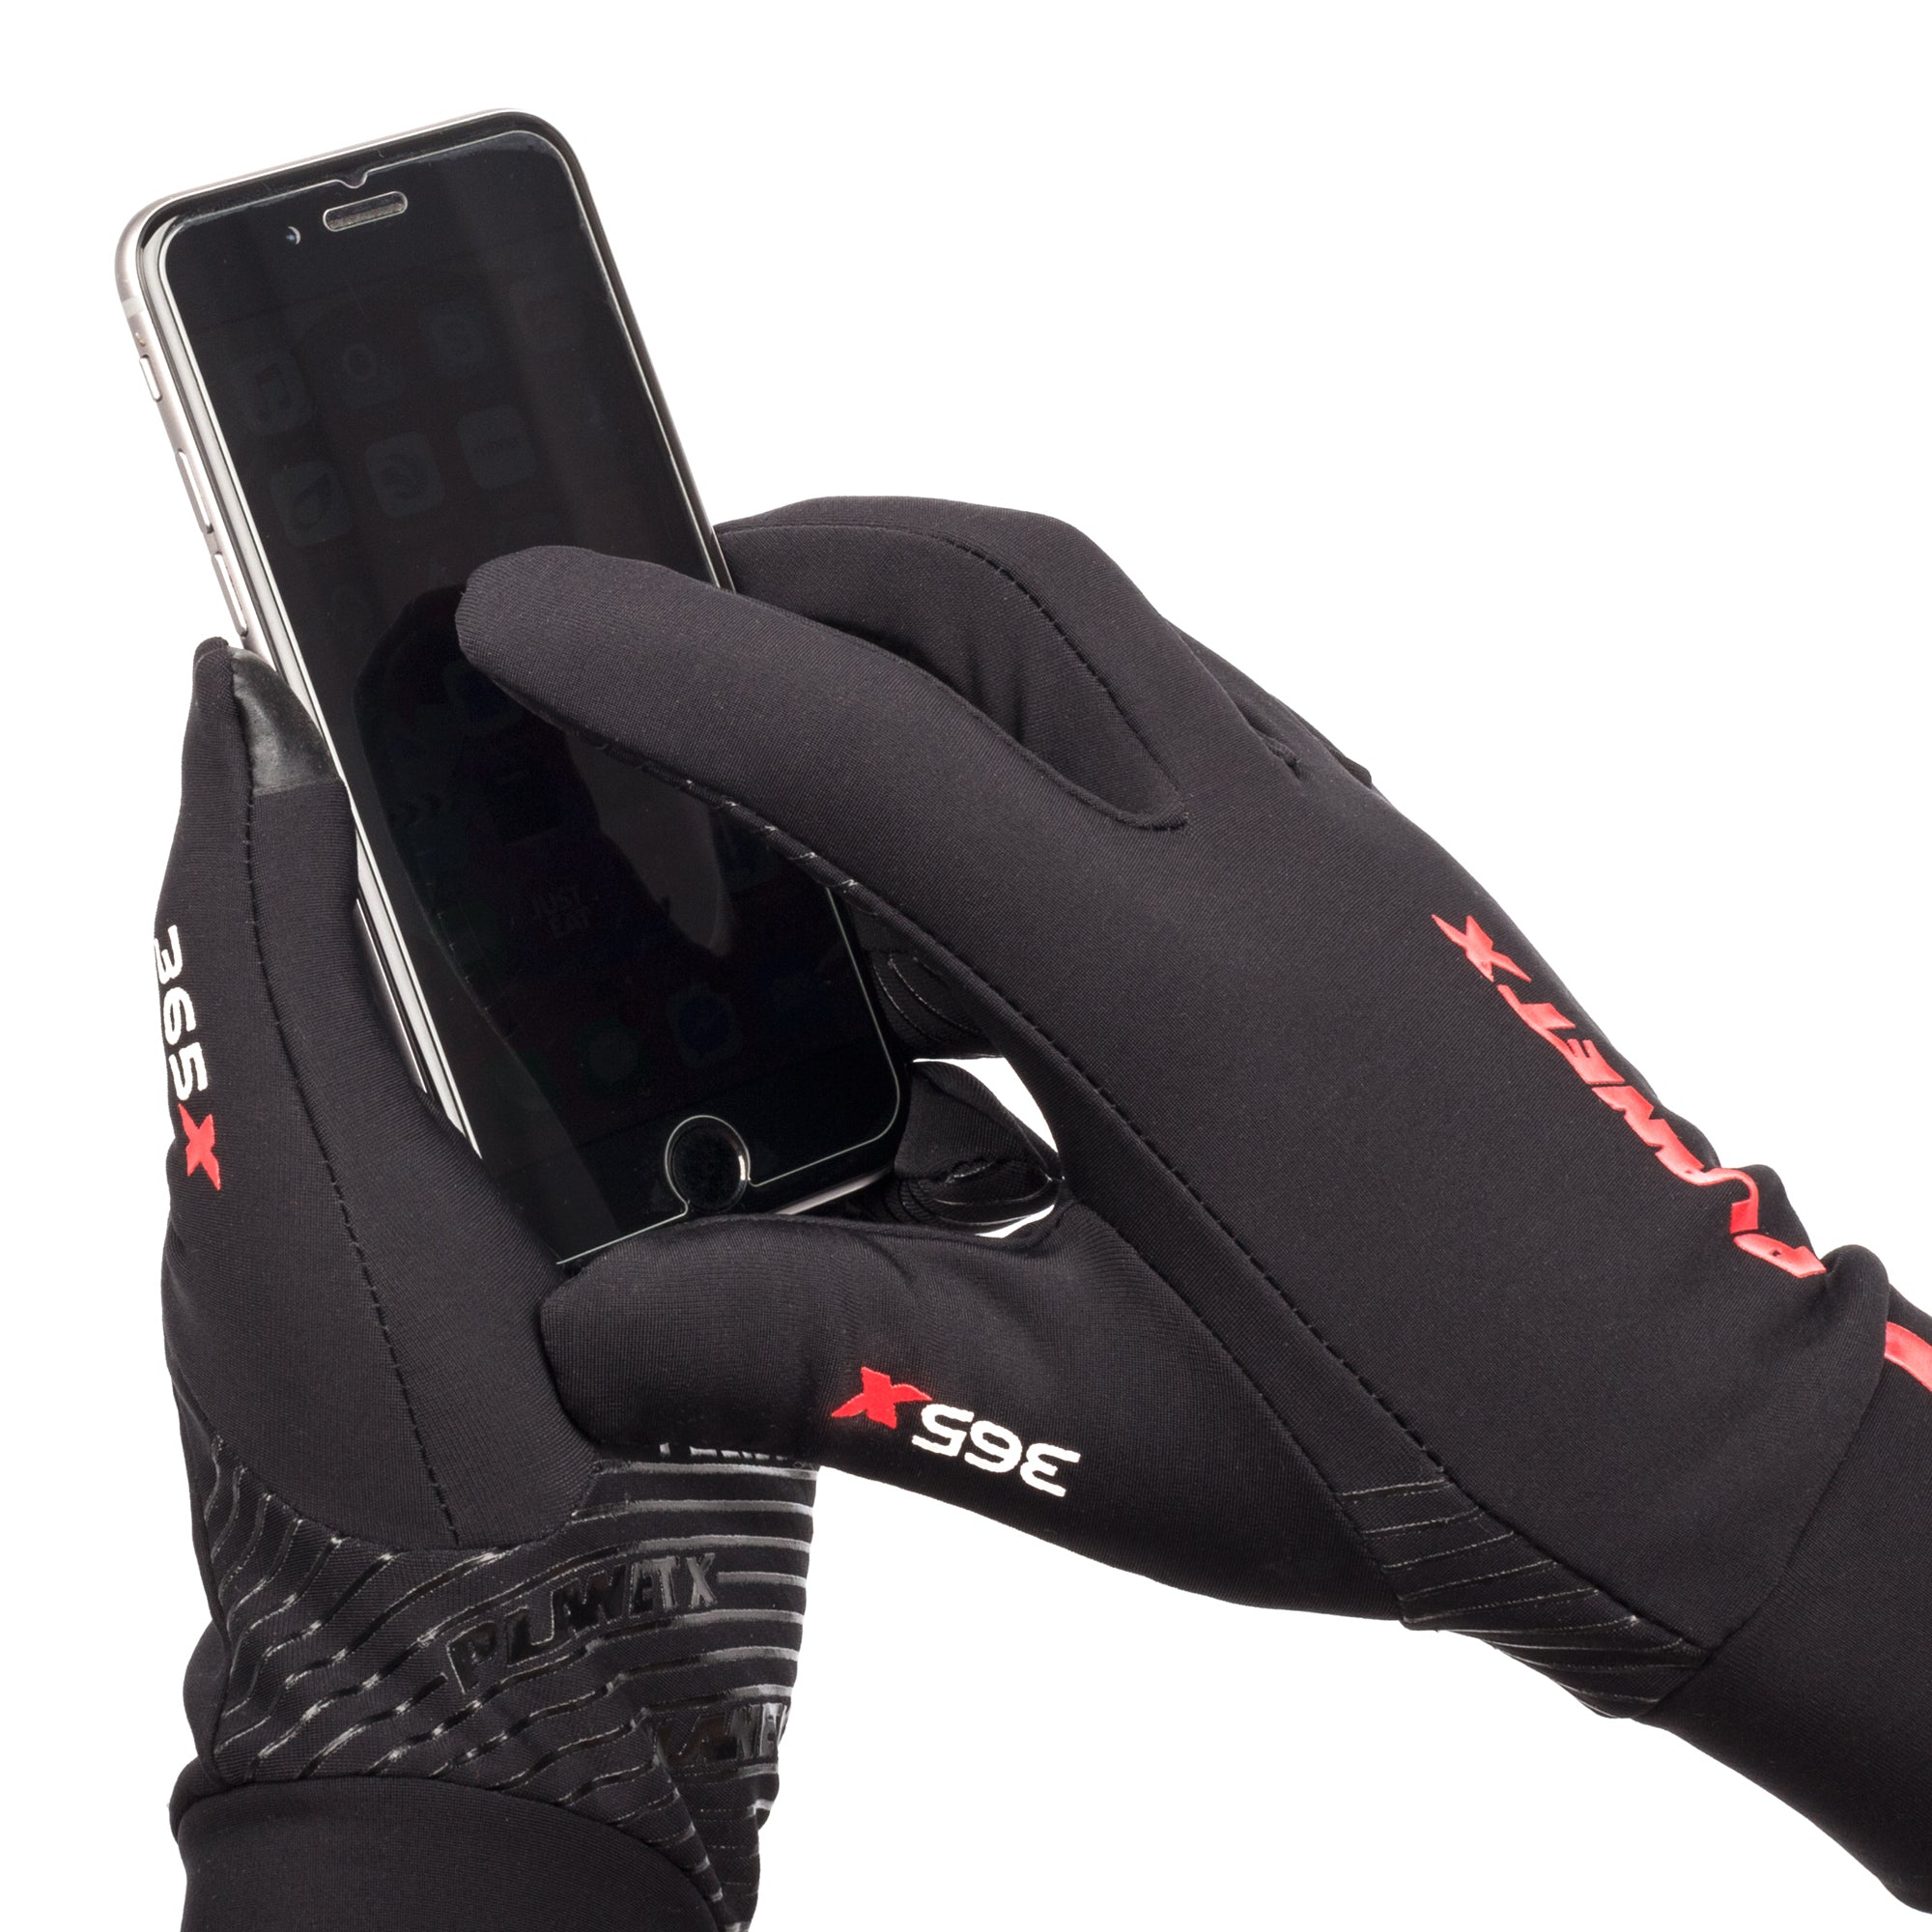 Planet X 365 Race Gloves